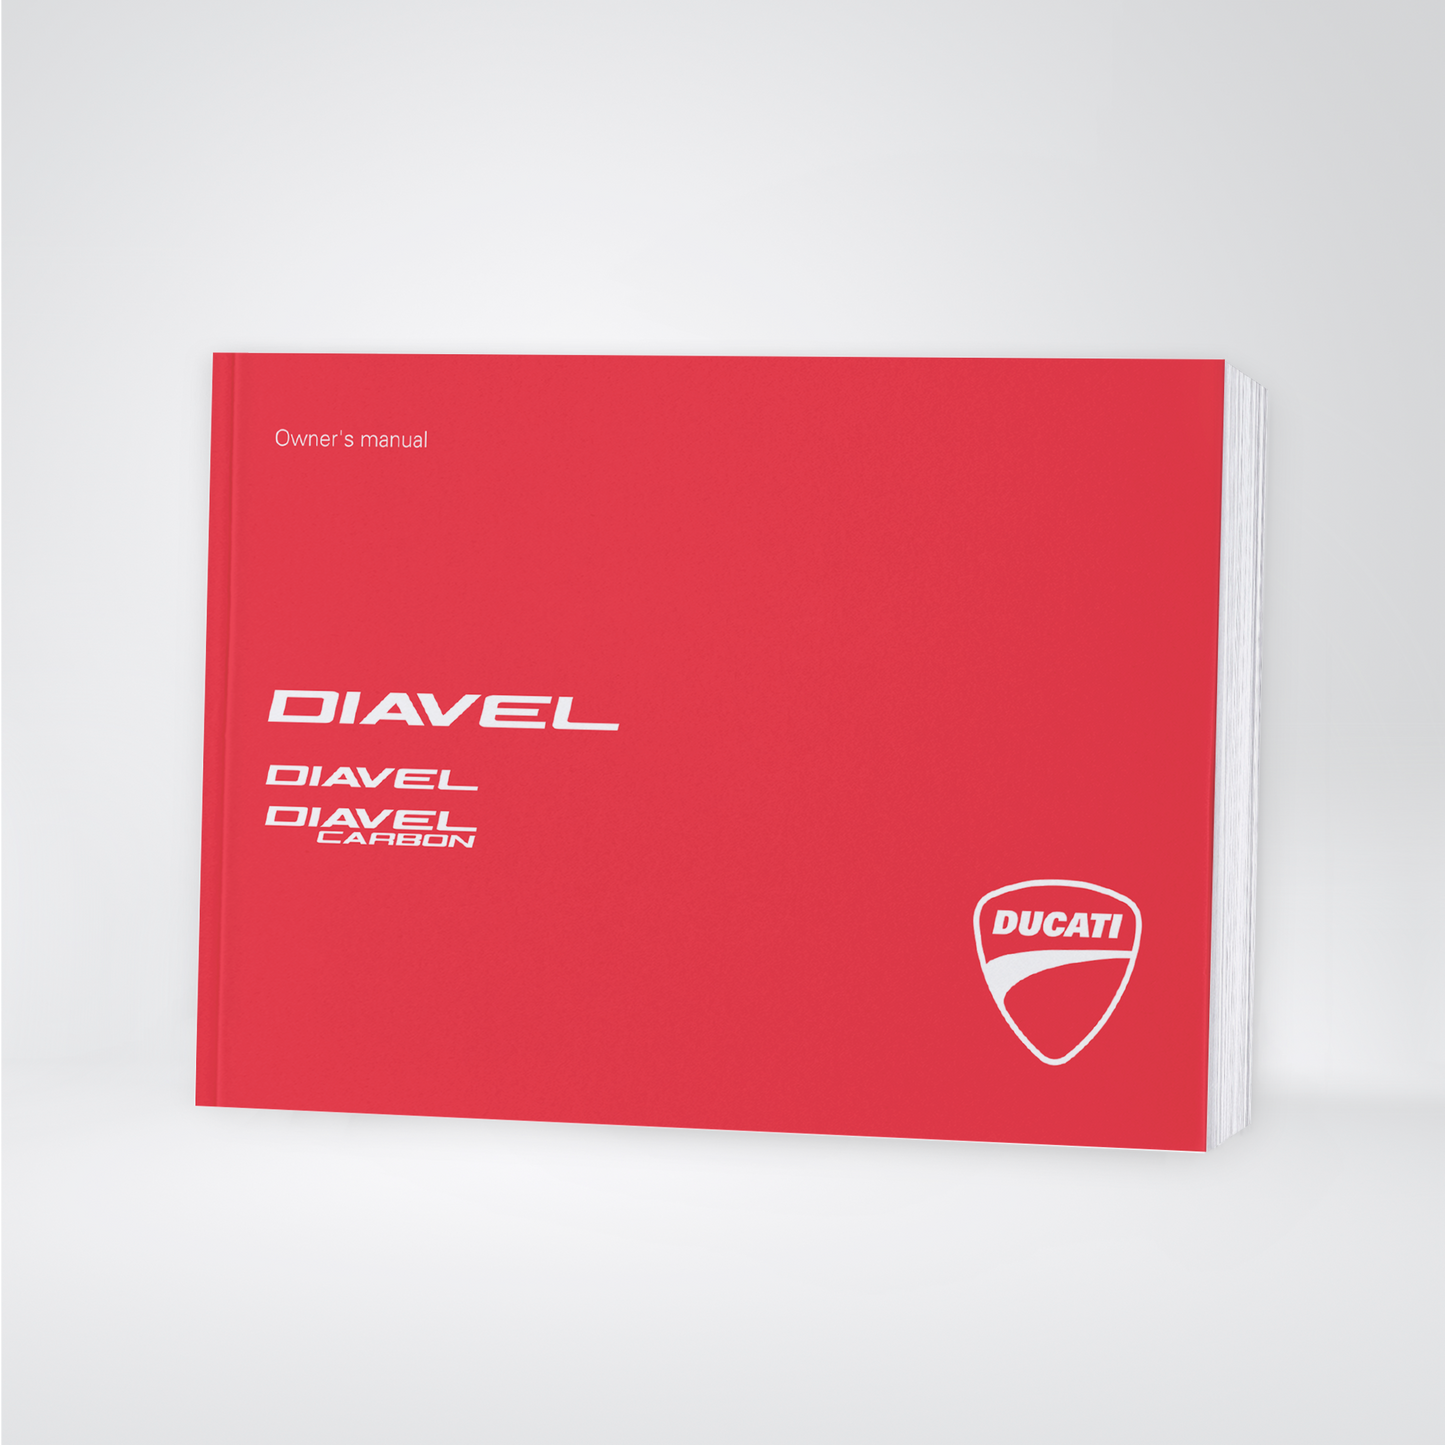 2015 Ducati Diavel/Diavel Carbon Gebruikershandleiding | Engels